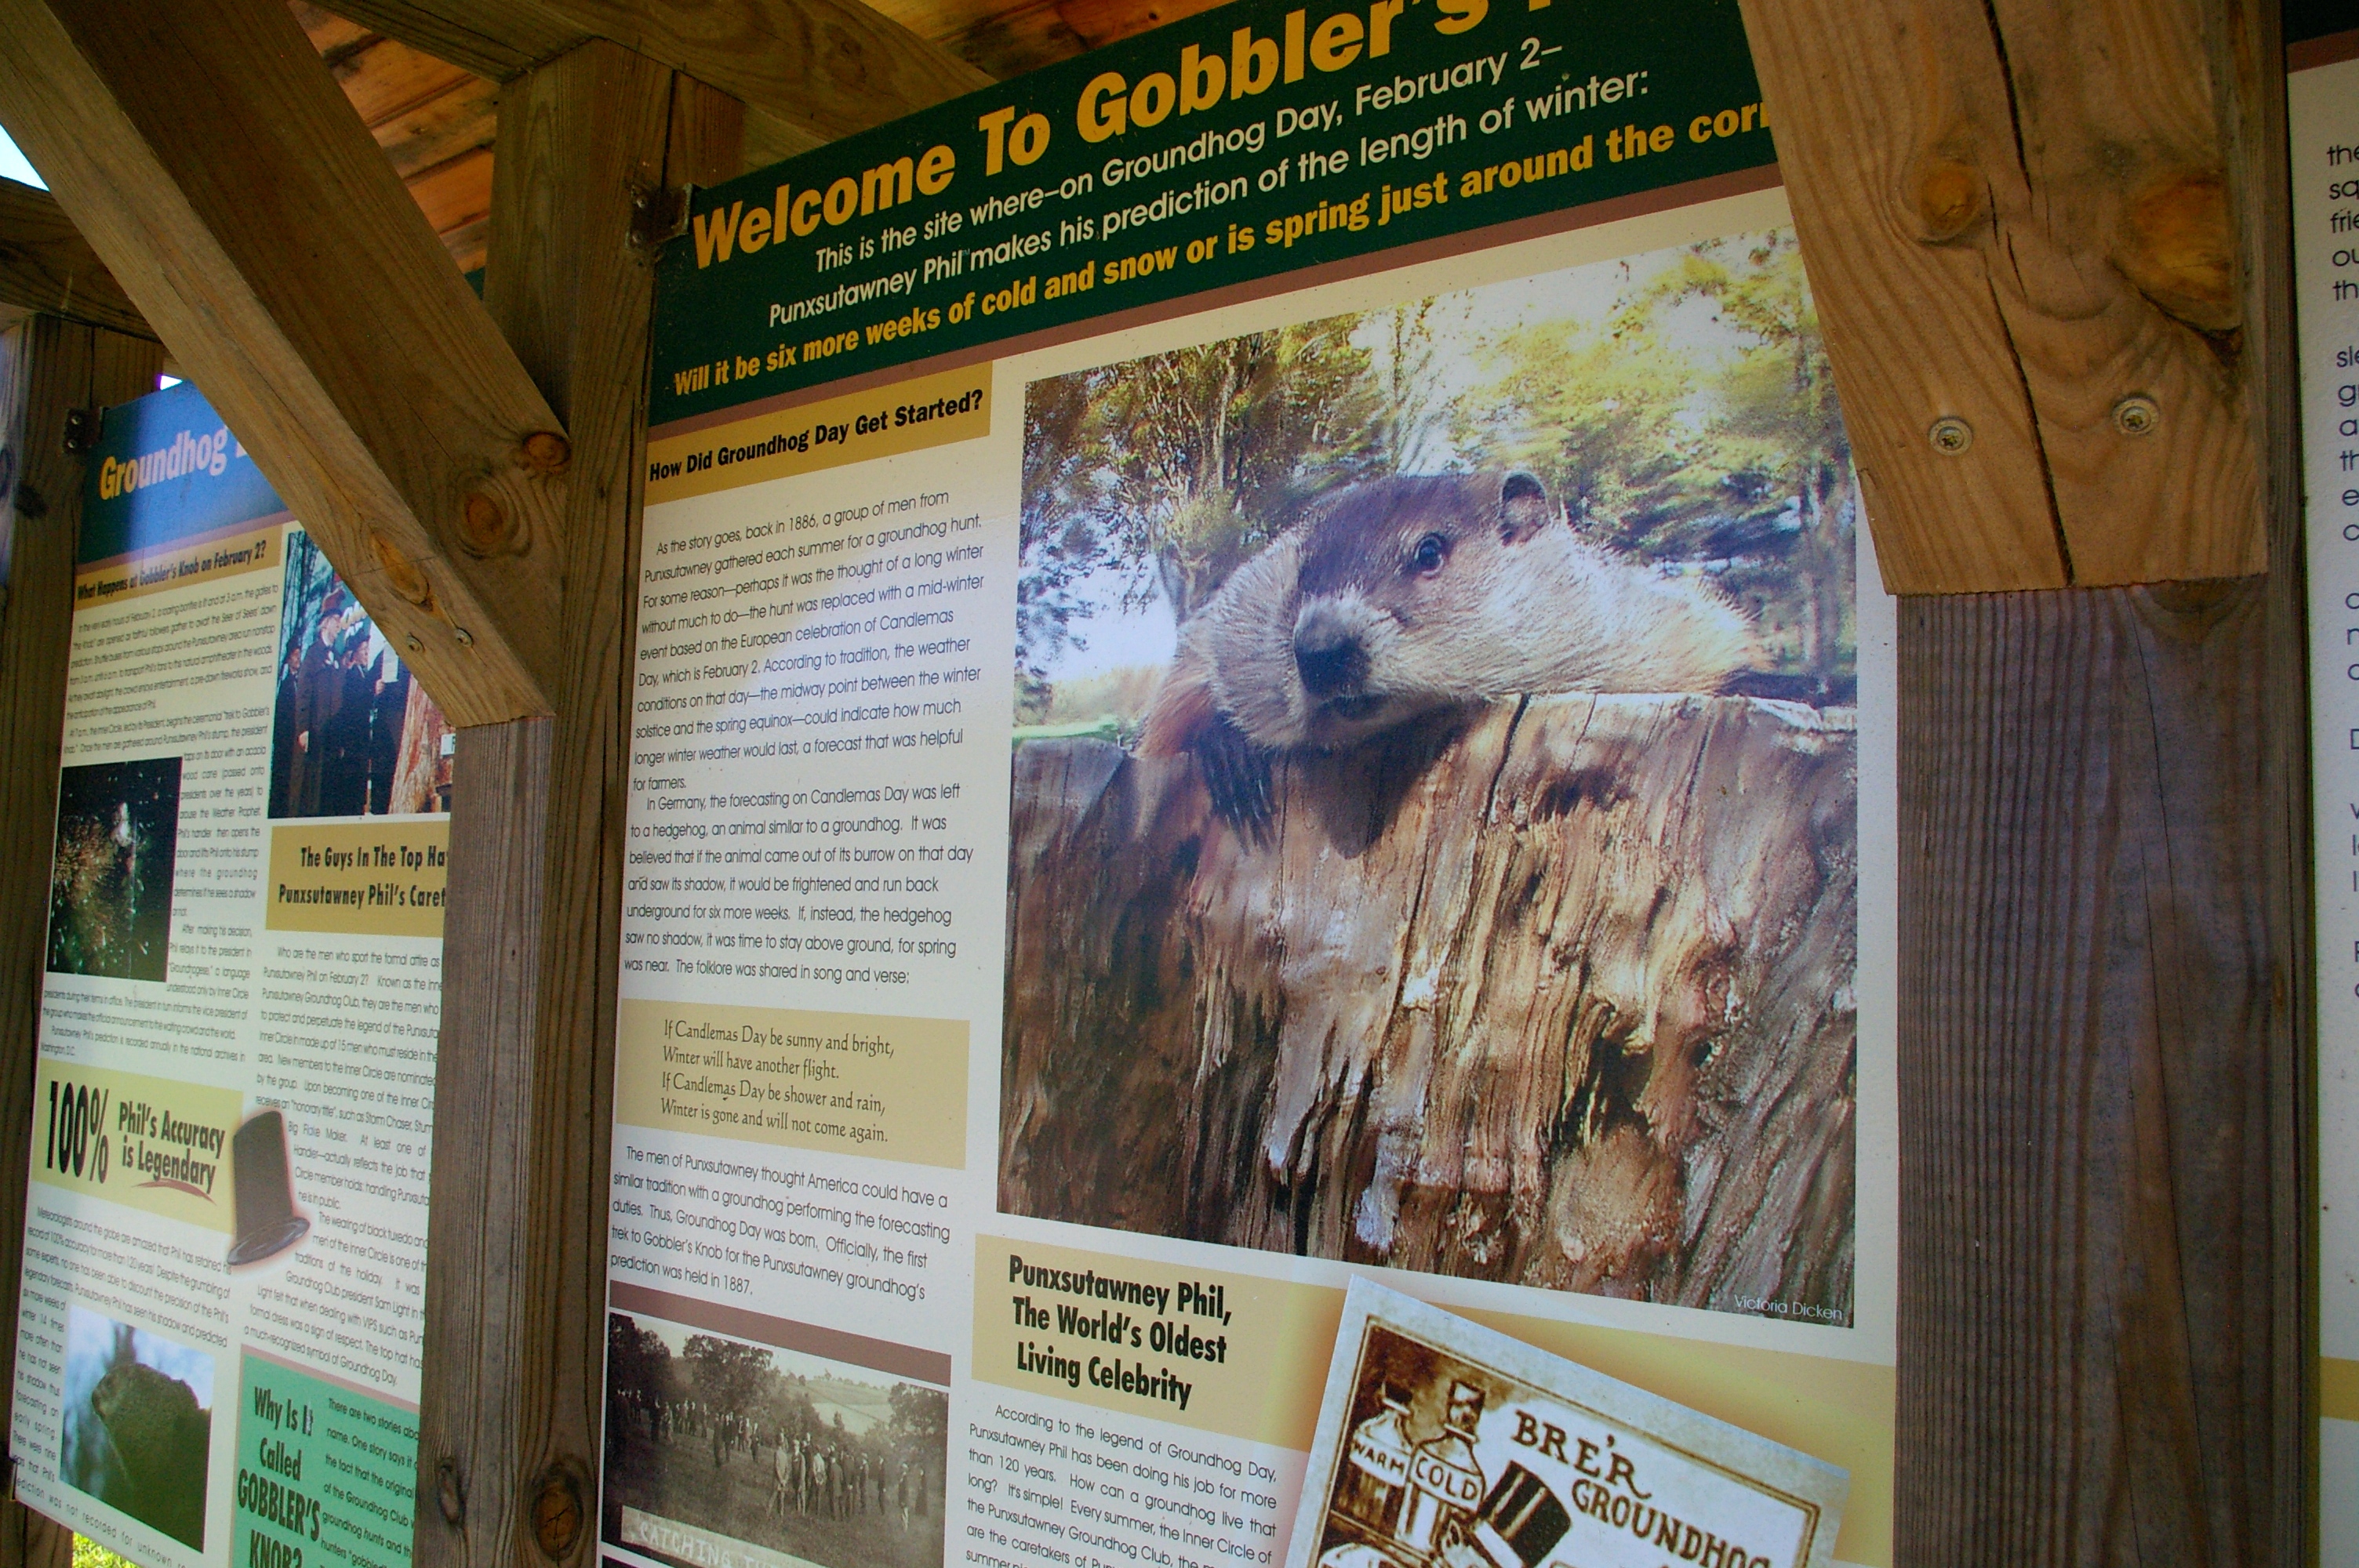 Signage describing Groundhog Day at Gobbler's Knob in Punxsutawney, Pennsylvania